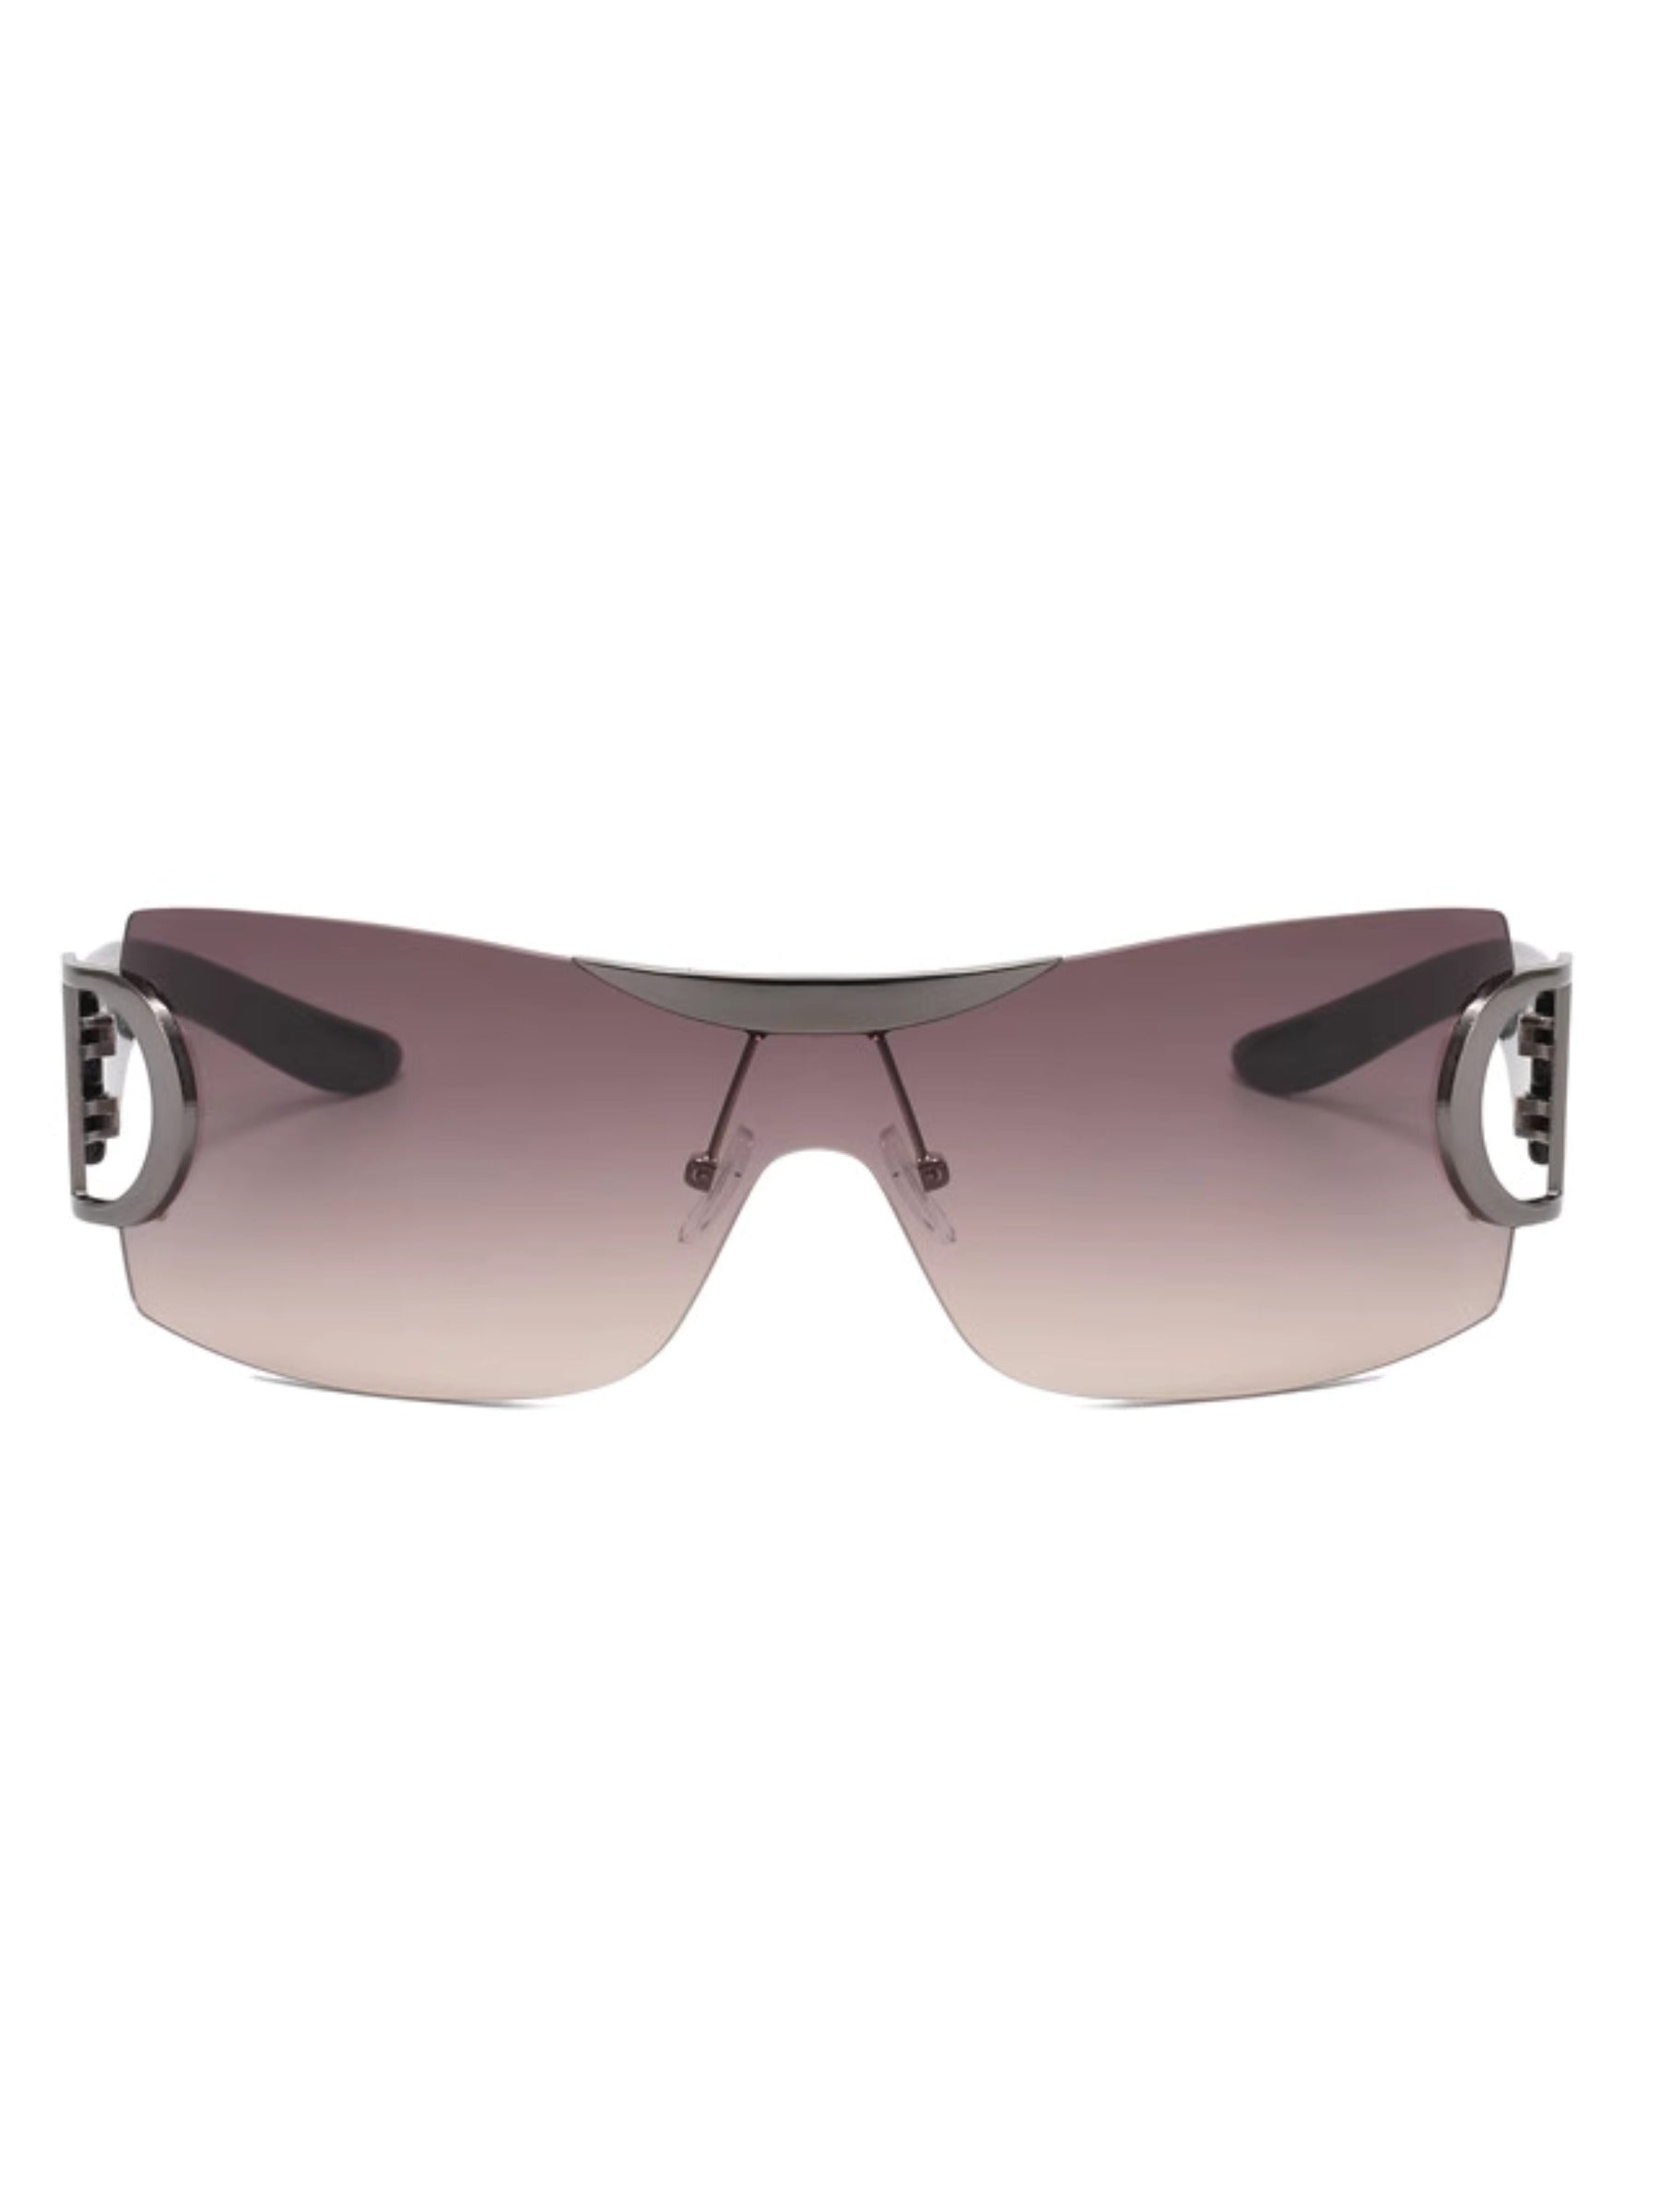 LaPose Fashion - Cameron Sunglasses - Accesories, Sunglasses